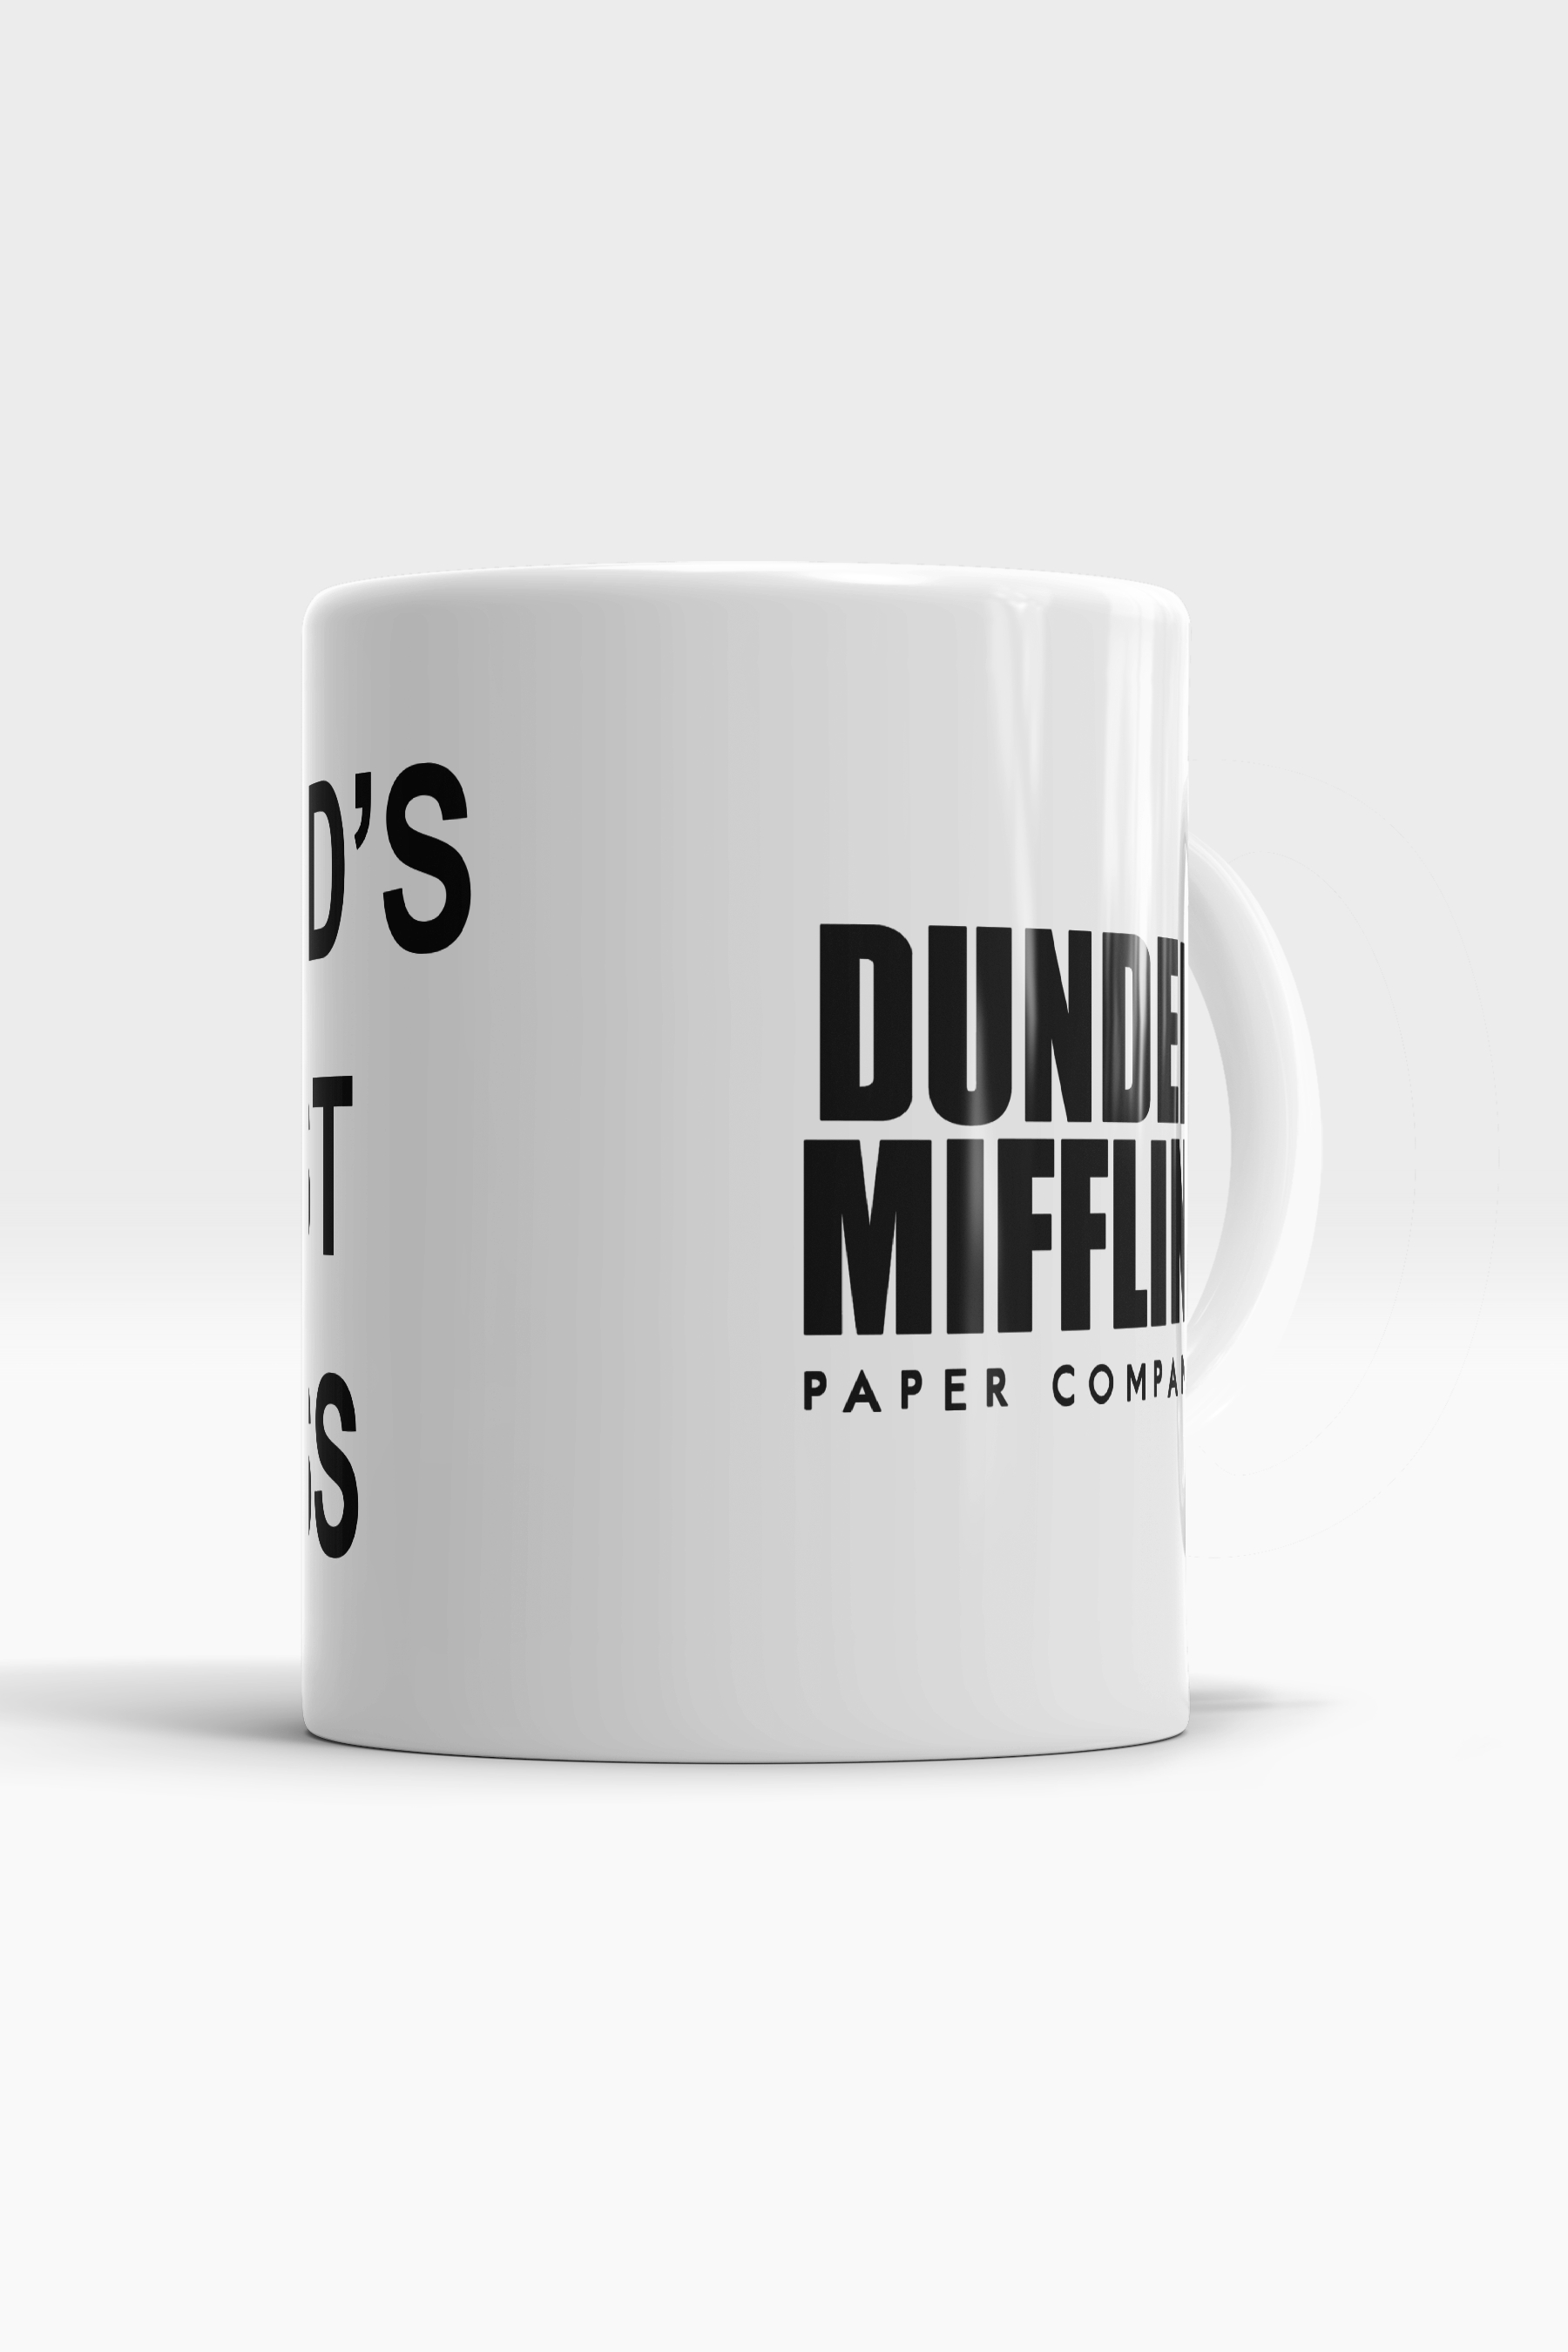 Camiseta Dunder Mifflin The Office + Caneca